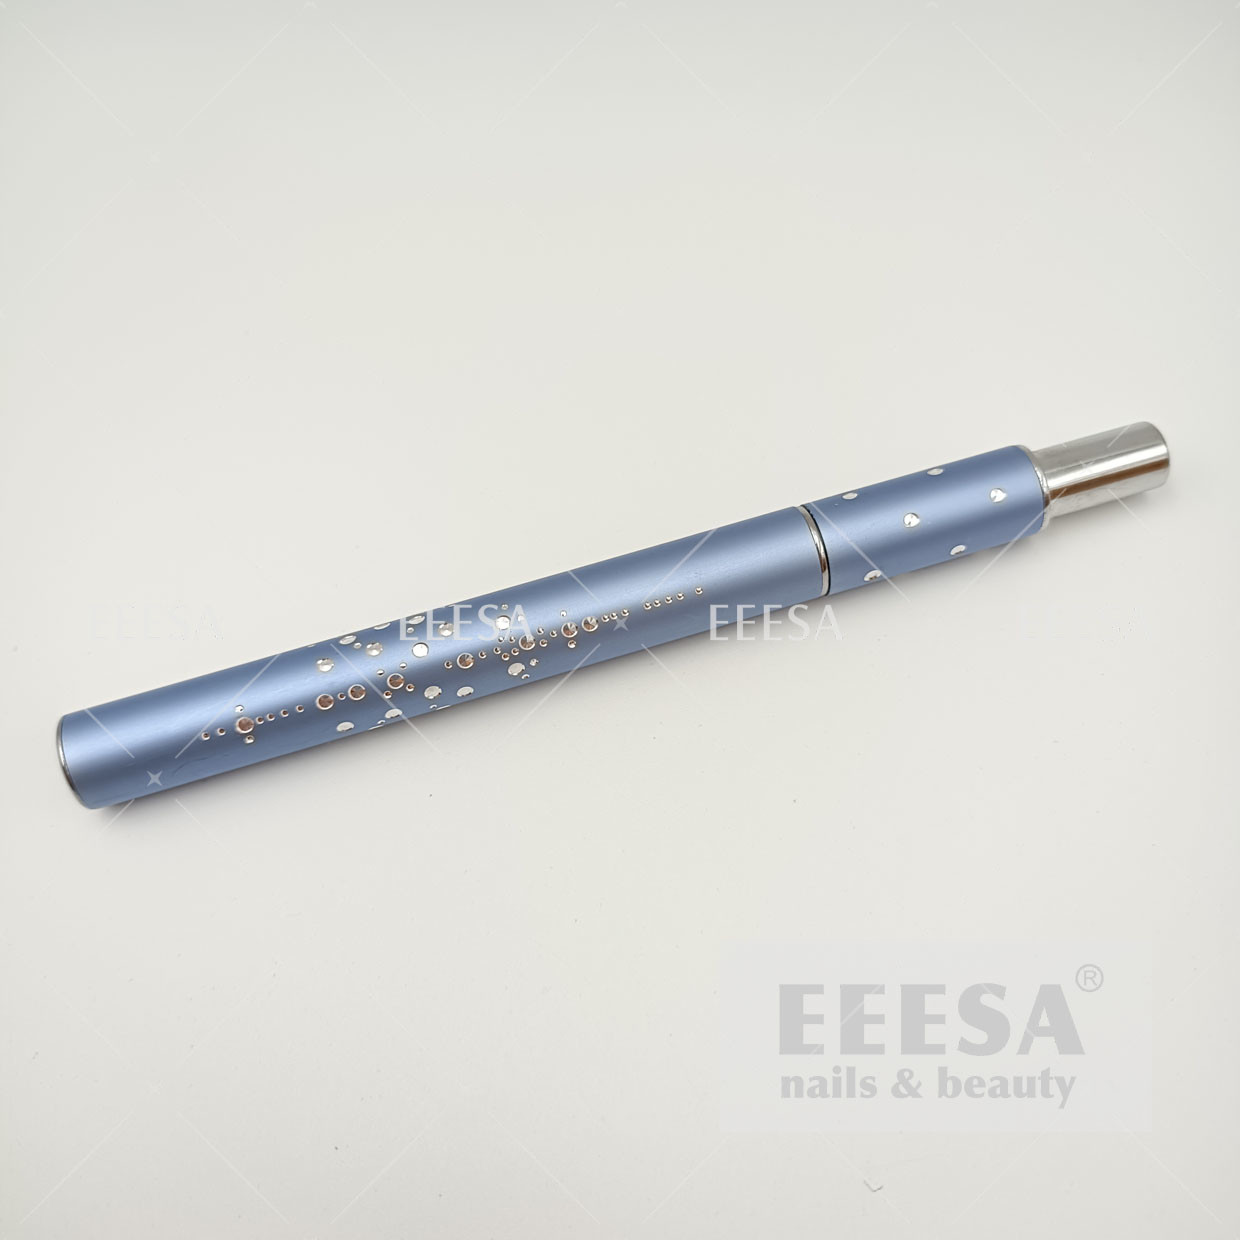  oem round oval crimped blue metallic handle pure kolinsky art nail acrylic brush Manufactures